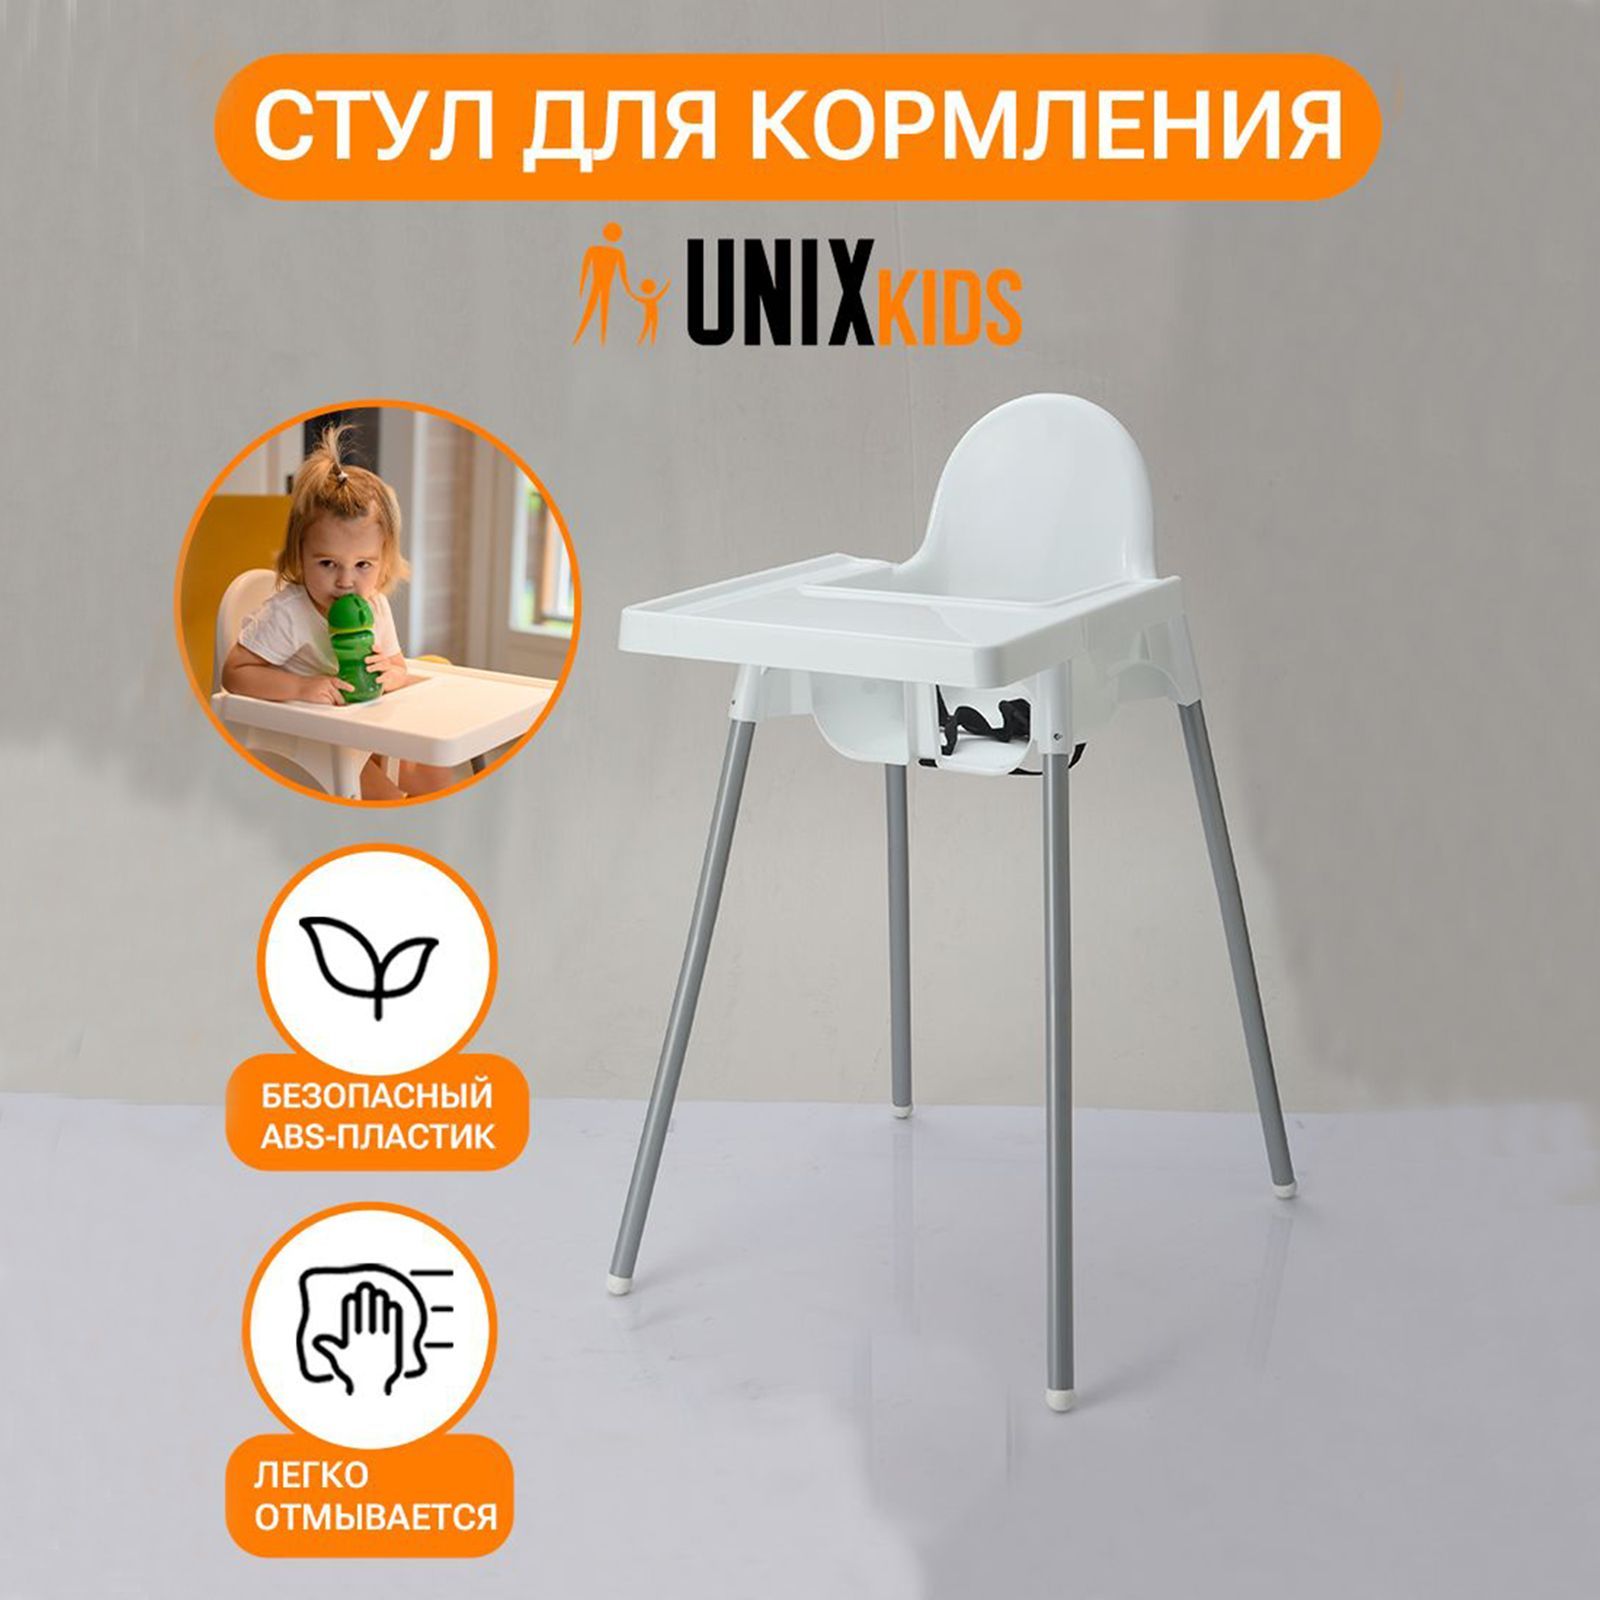 Стульчик для кормления UNIX Kids Fixed White - аналог ИКЕА, со столиком стульчик для кормления forest kids olof